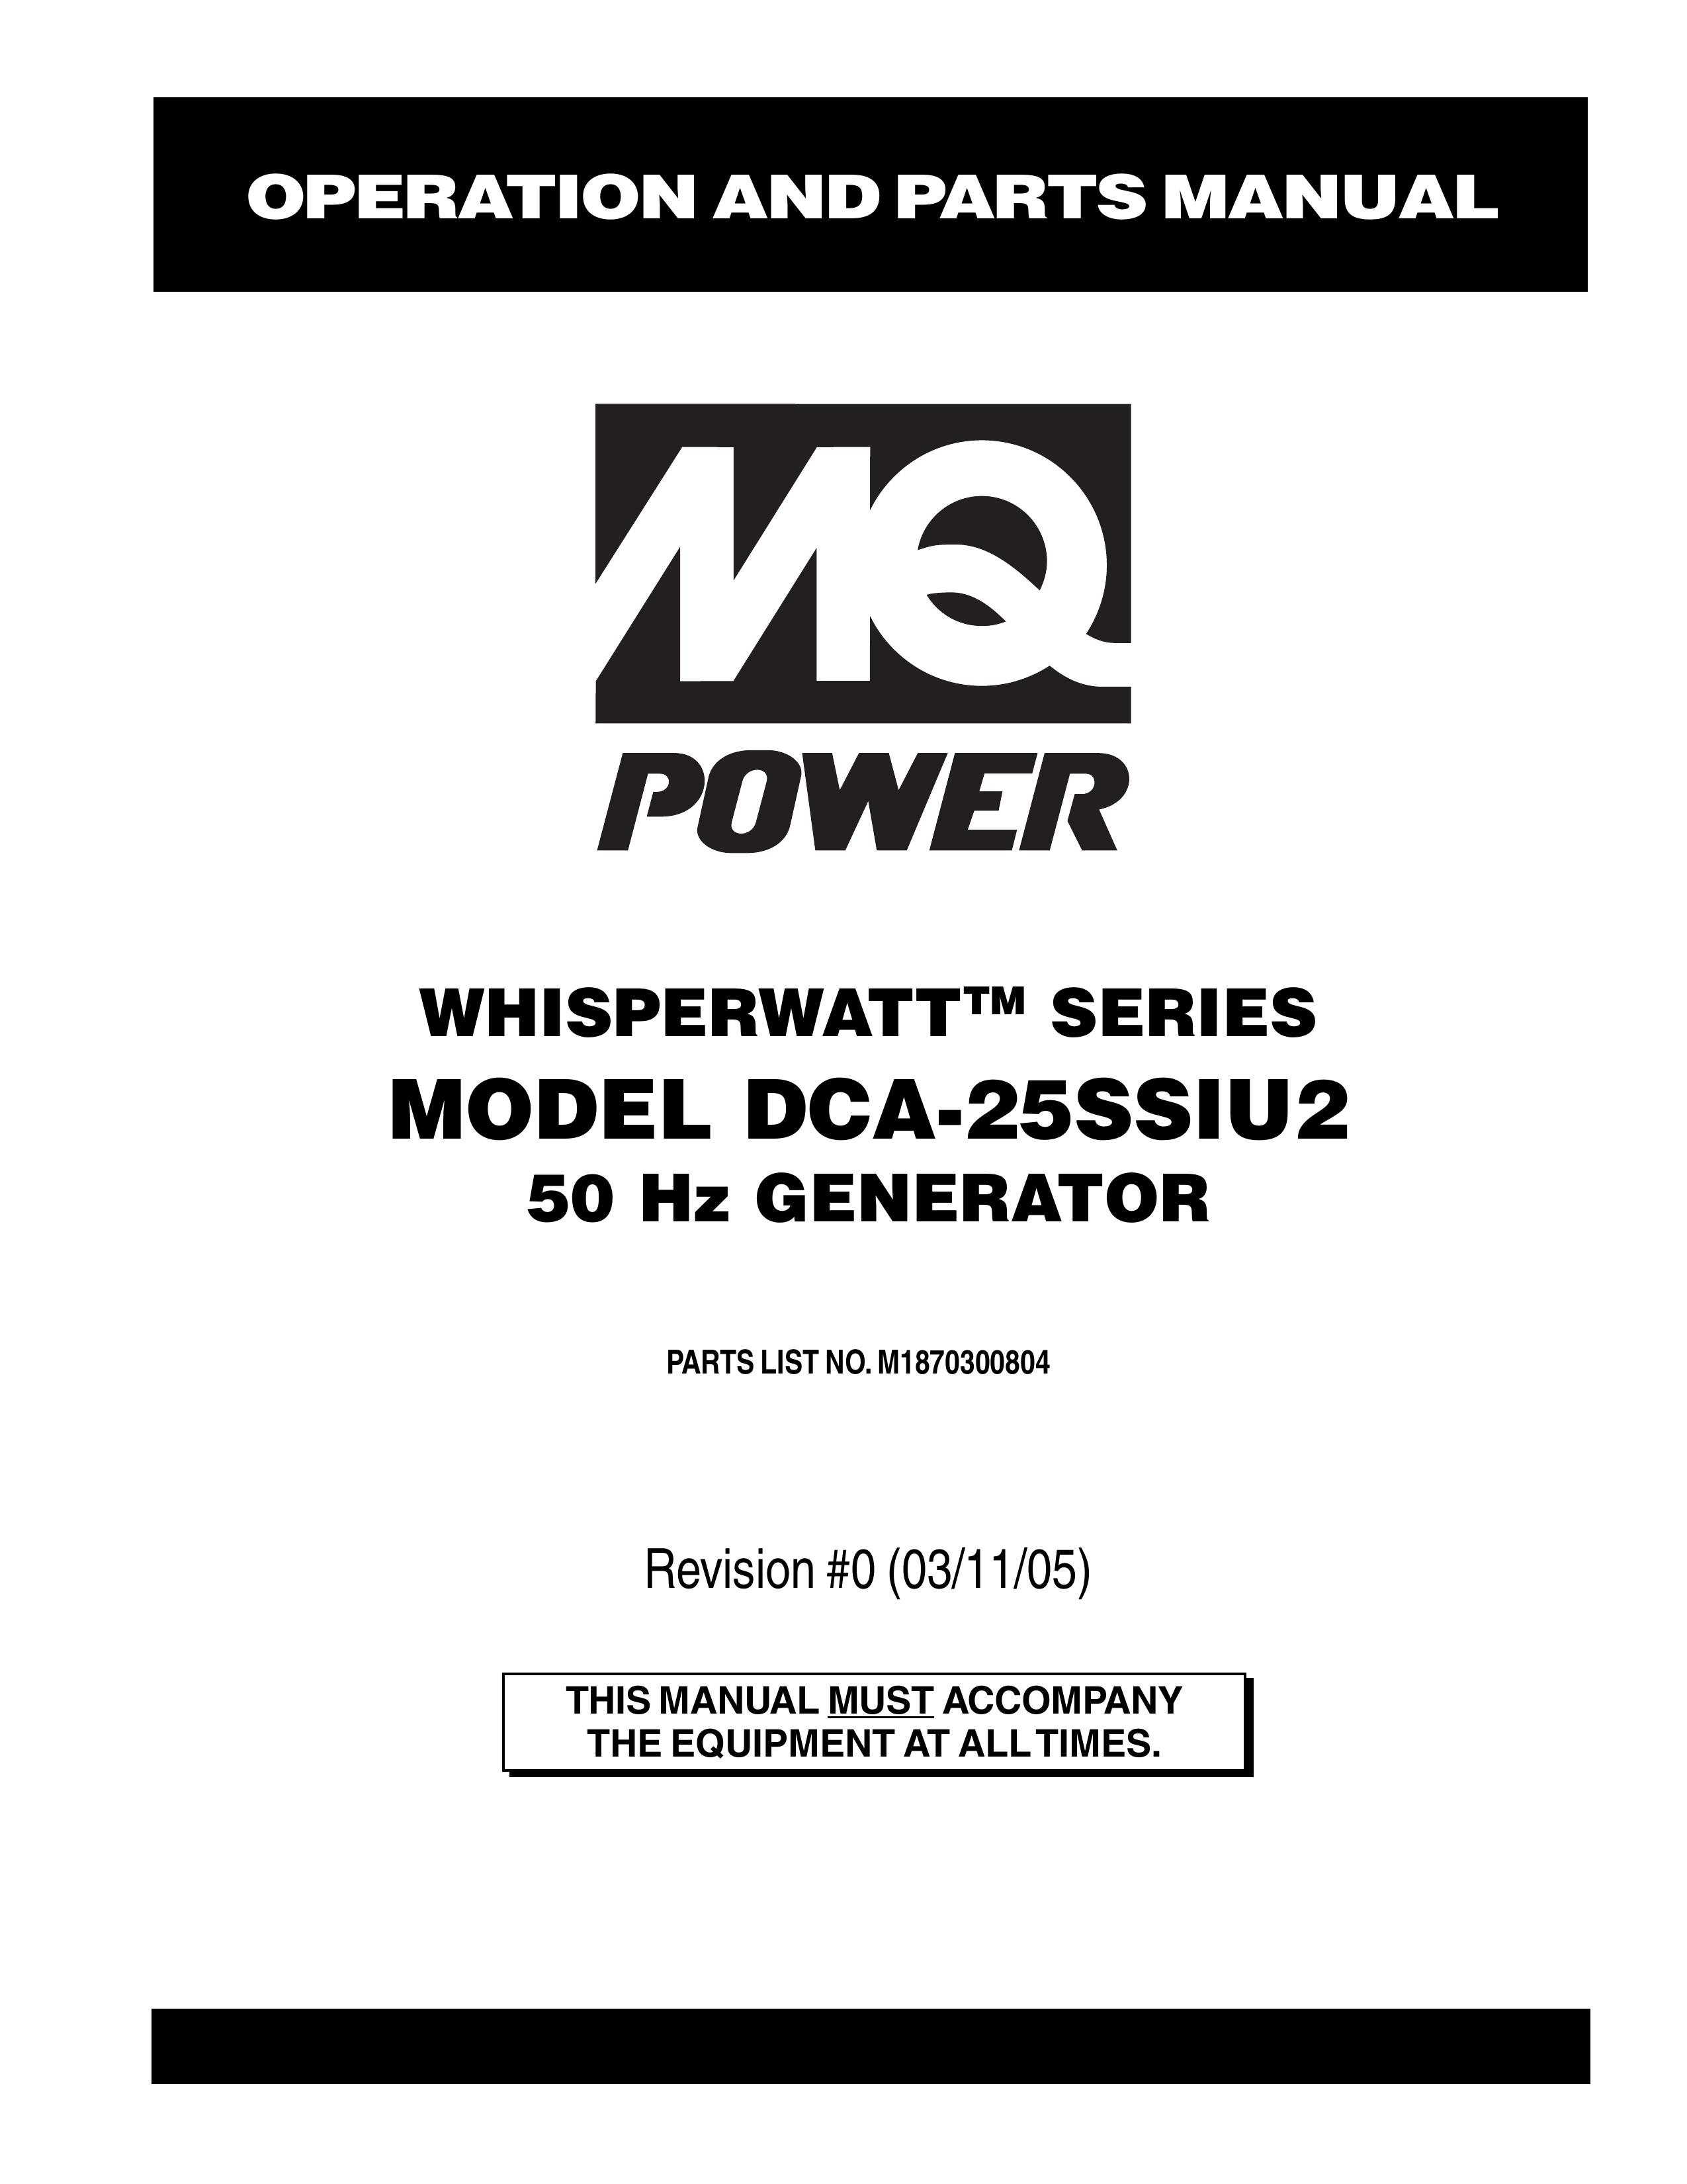 Multiquip DCA-25SSIU2 Portable Generator User Manual